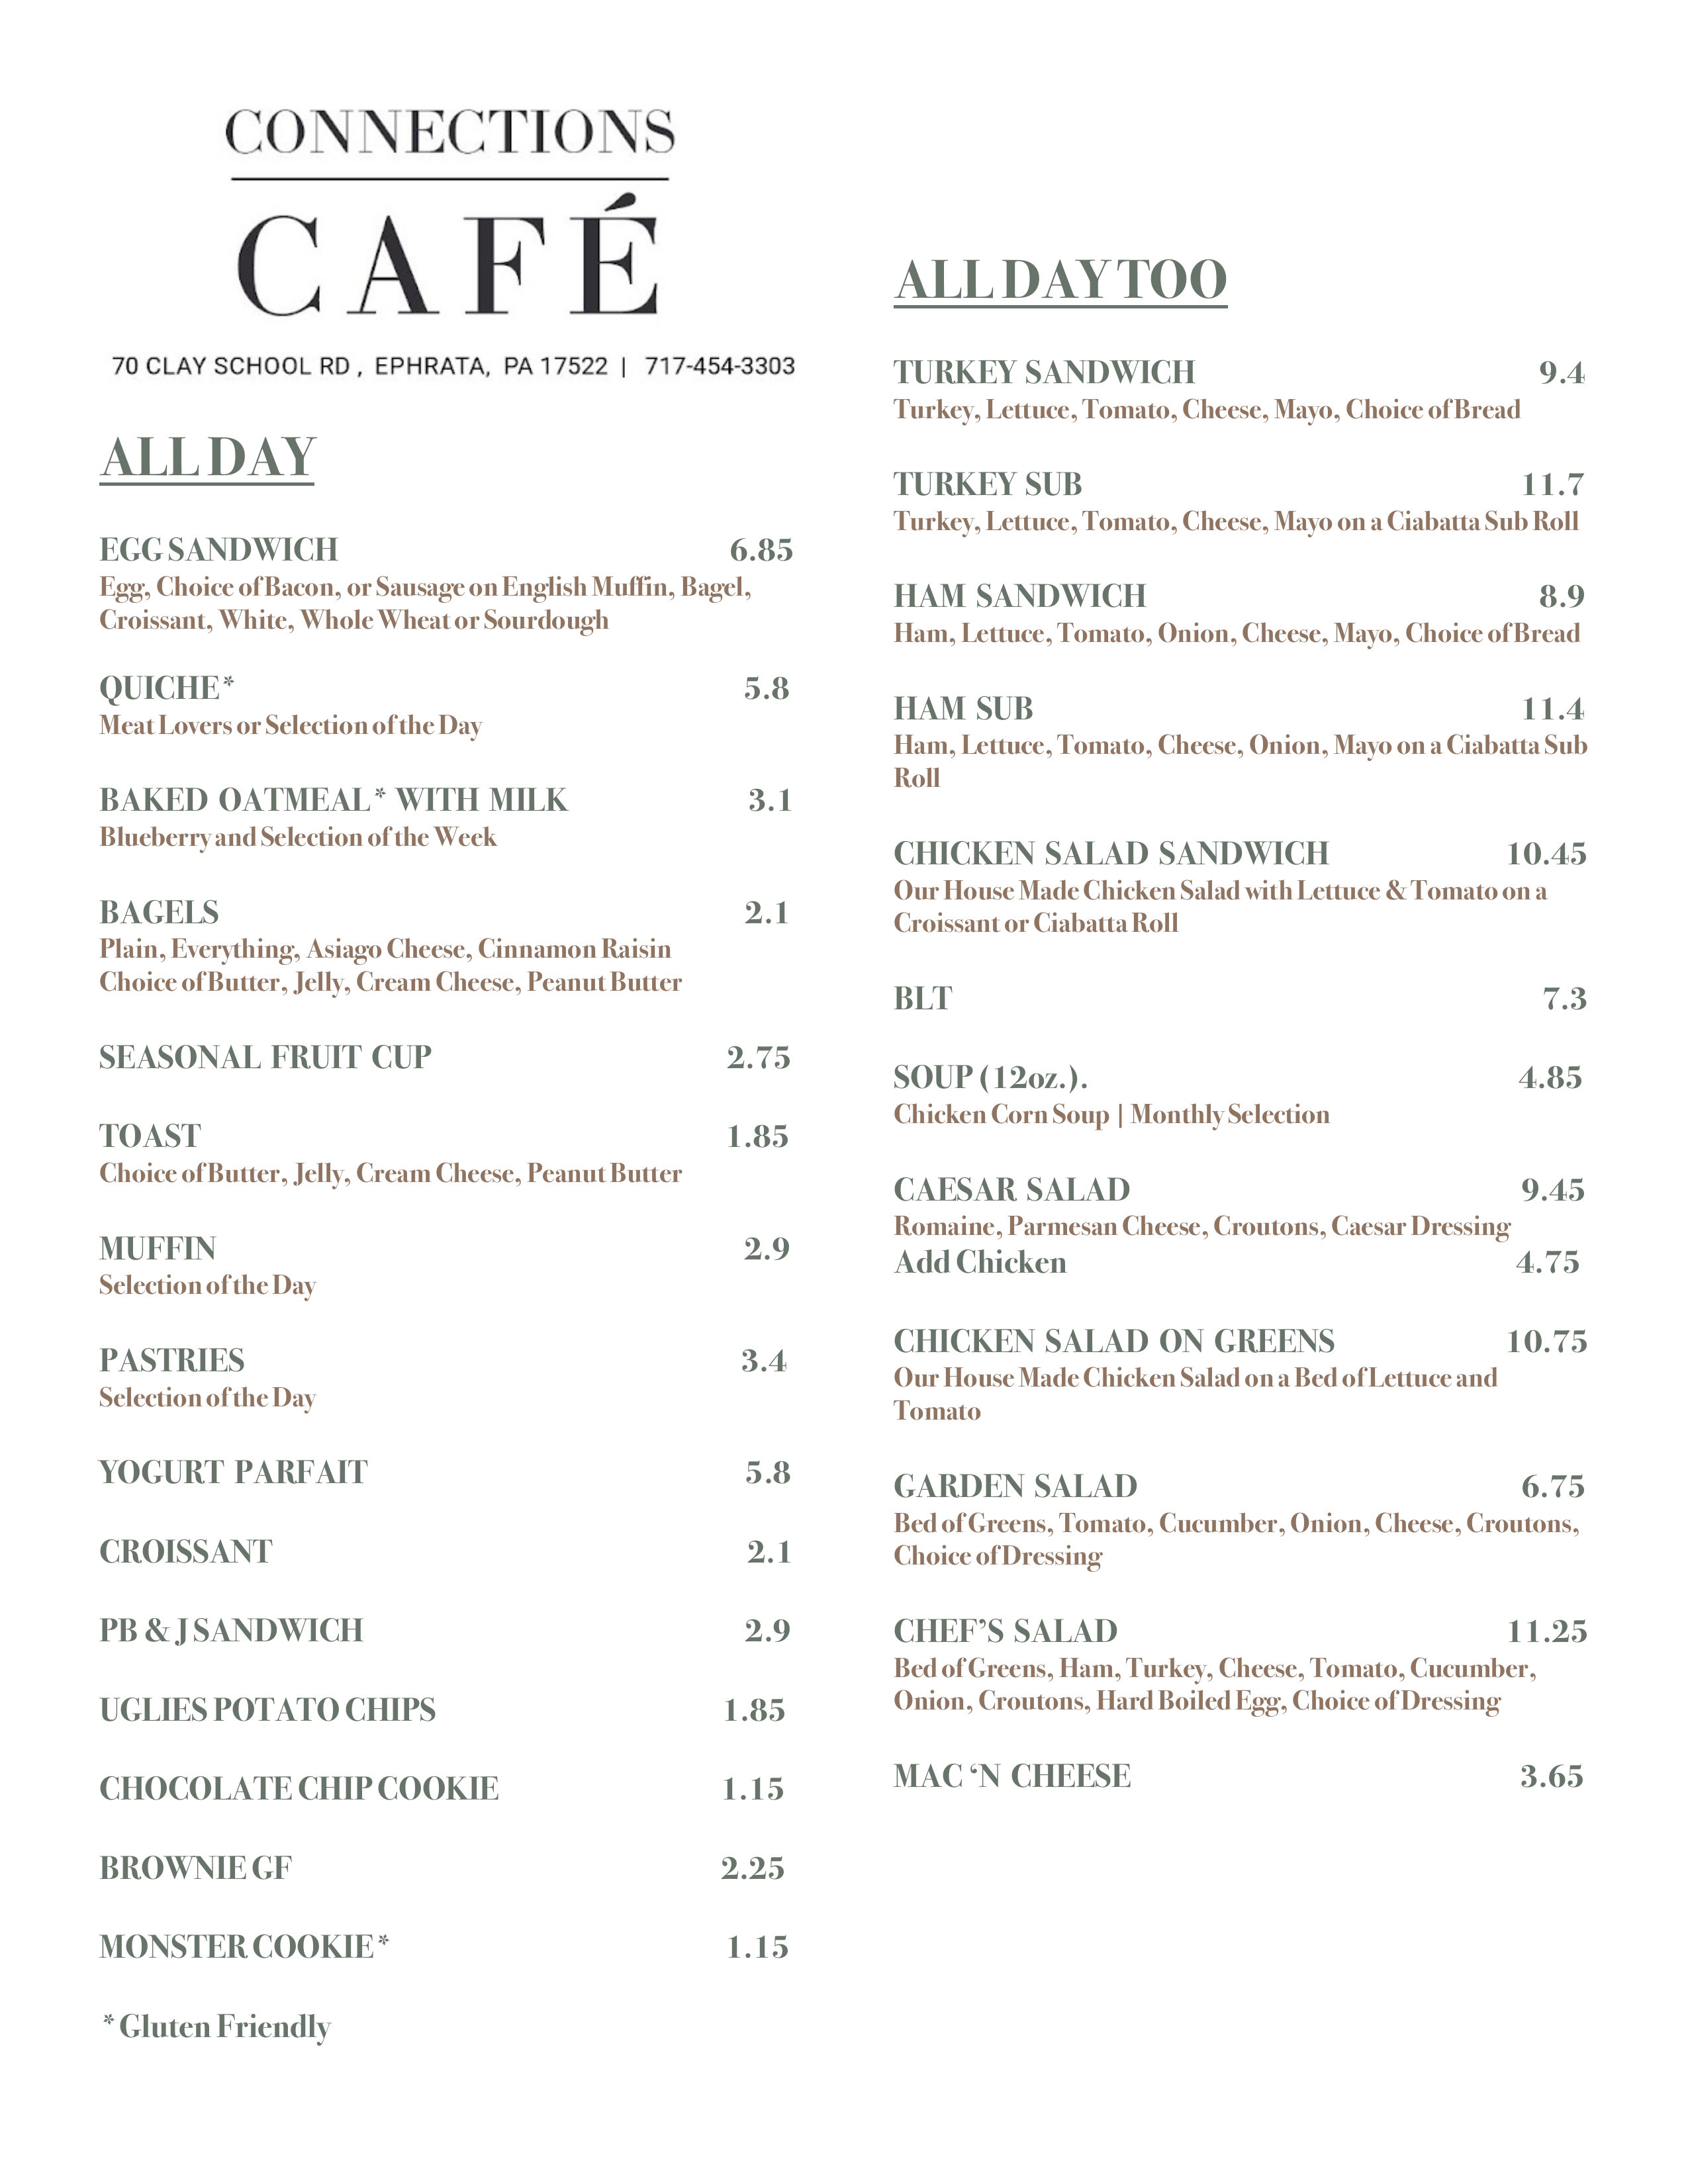 Cafe menu page 1